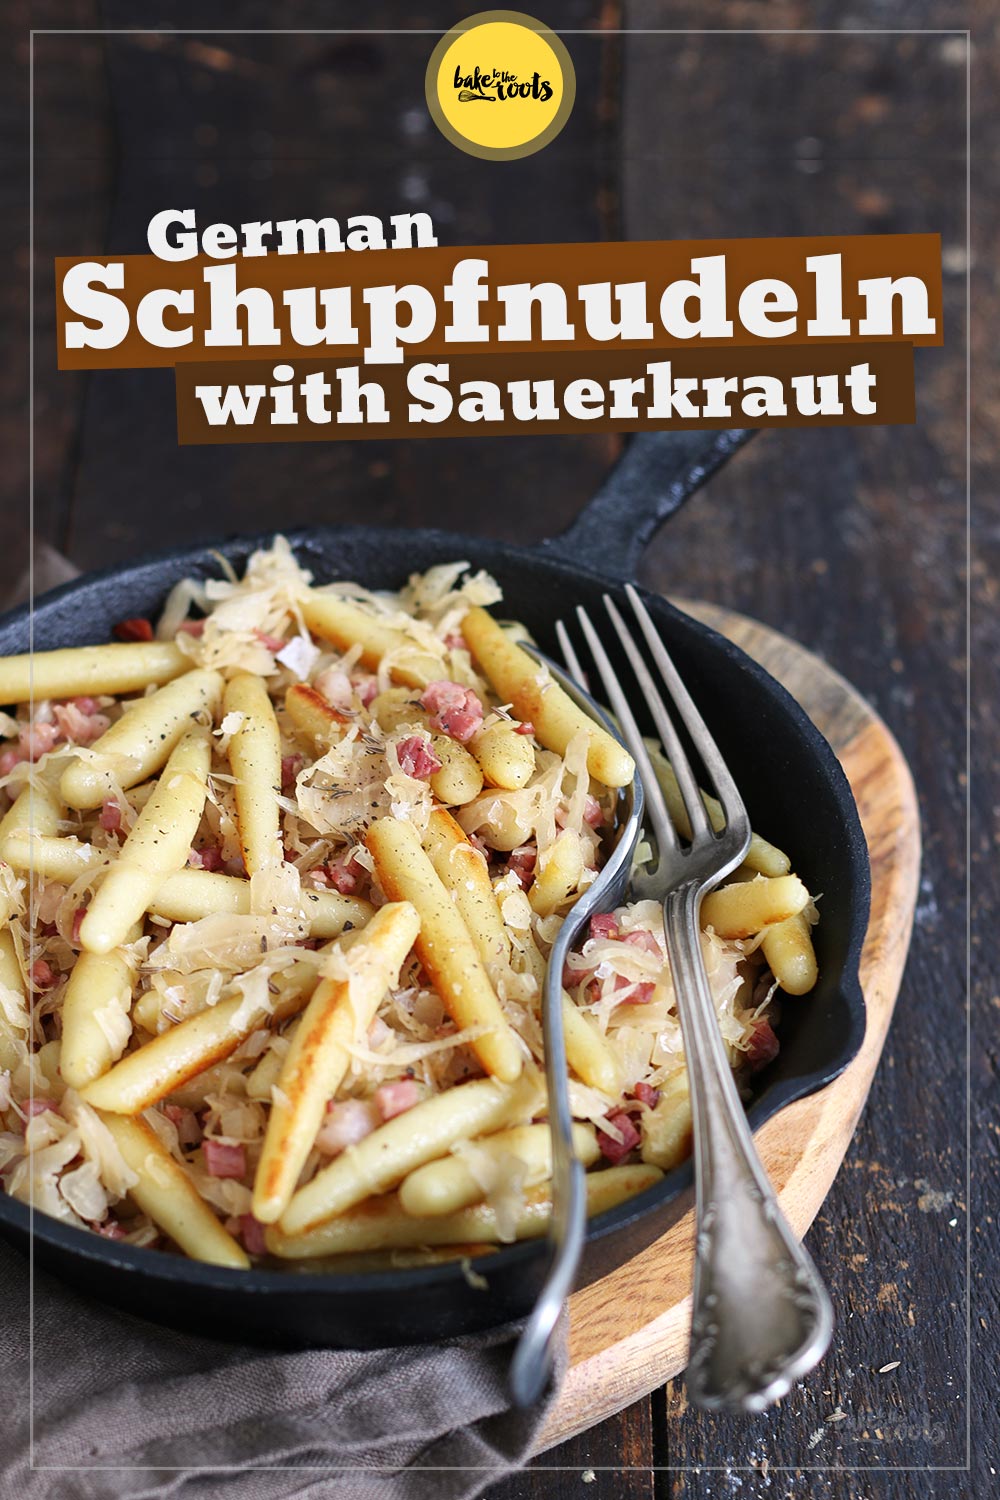 German Schupfnudeln (Potato Noodles) with Sauerkraut | Bake to the roots